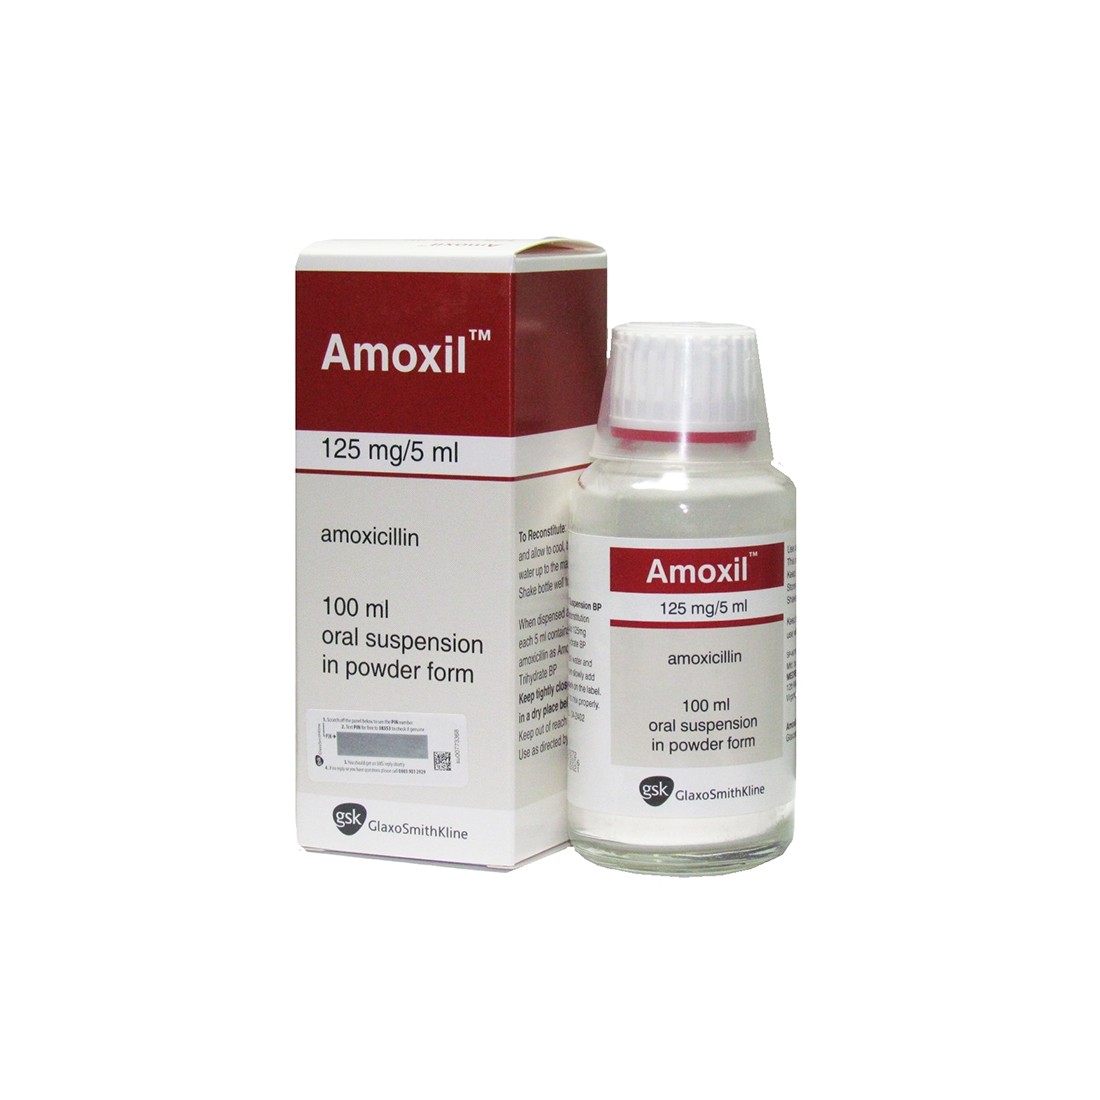 Amoxil cost